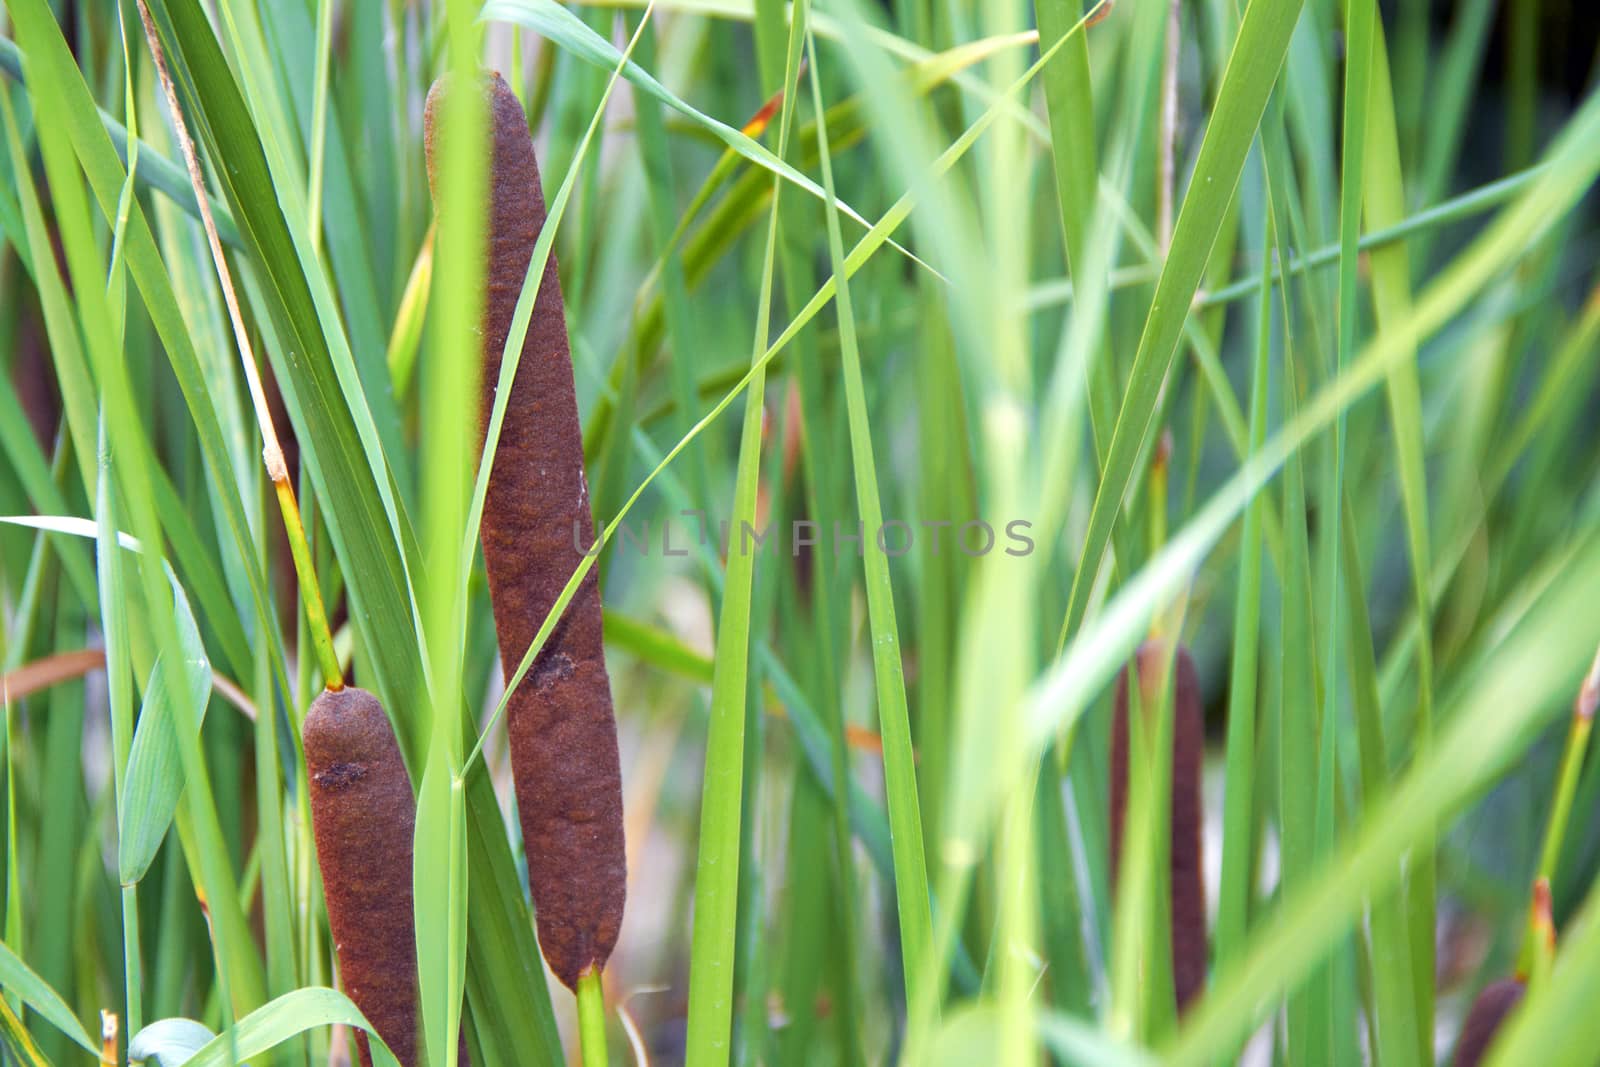 big green reed in summer season. nature